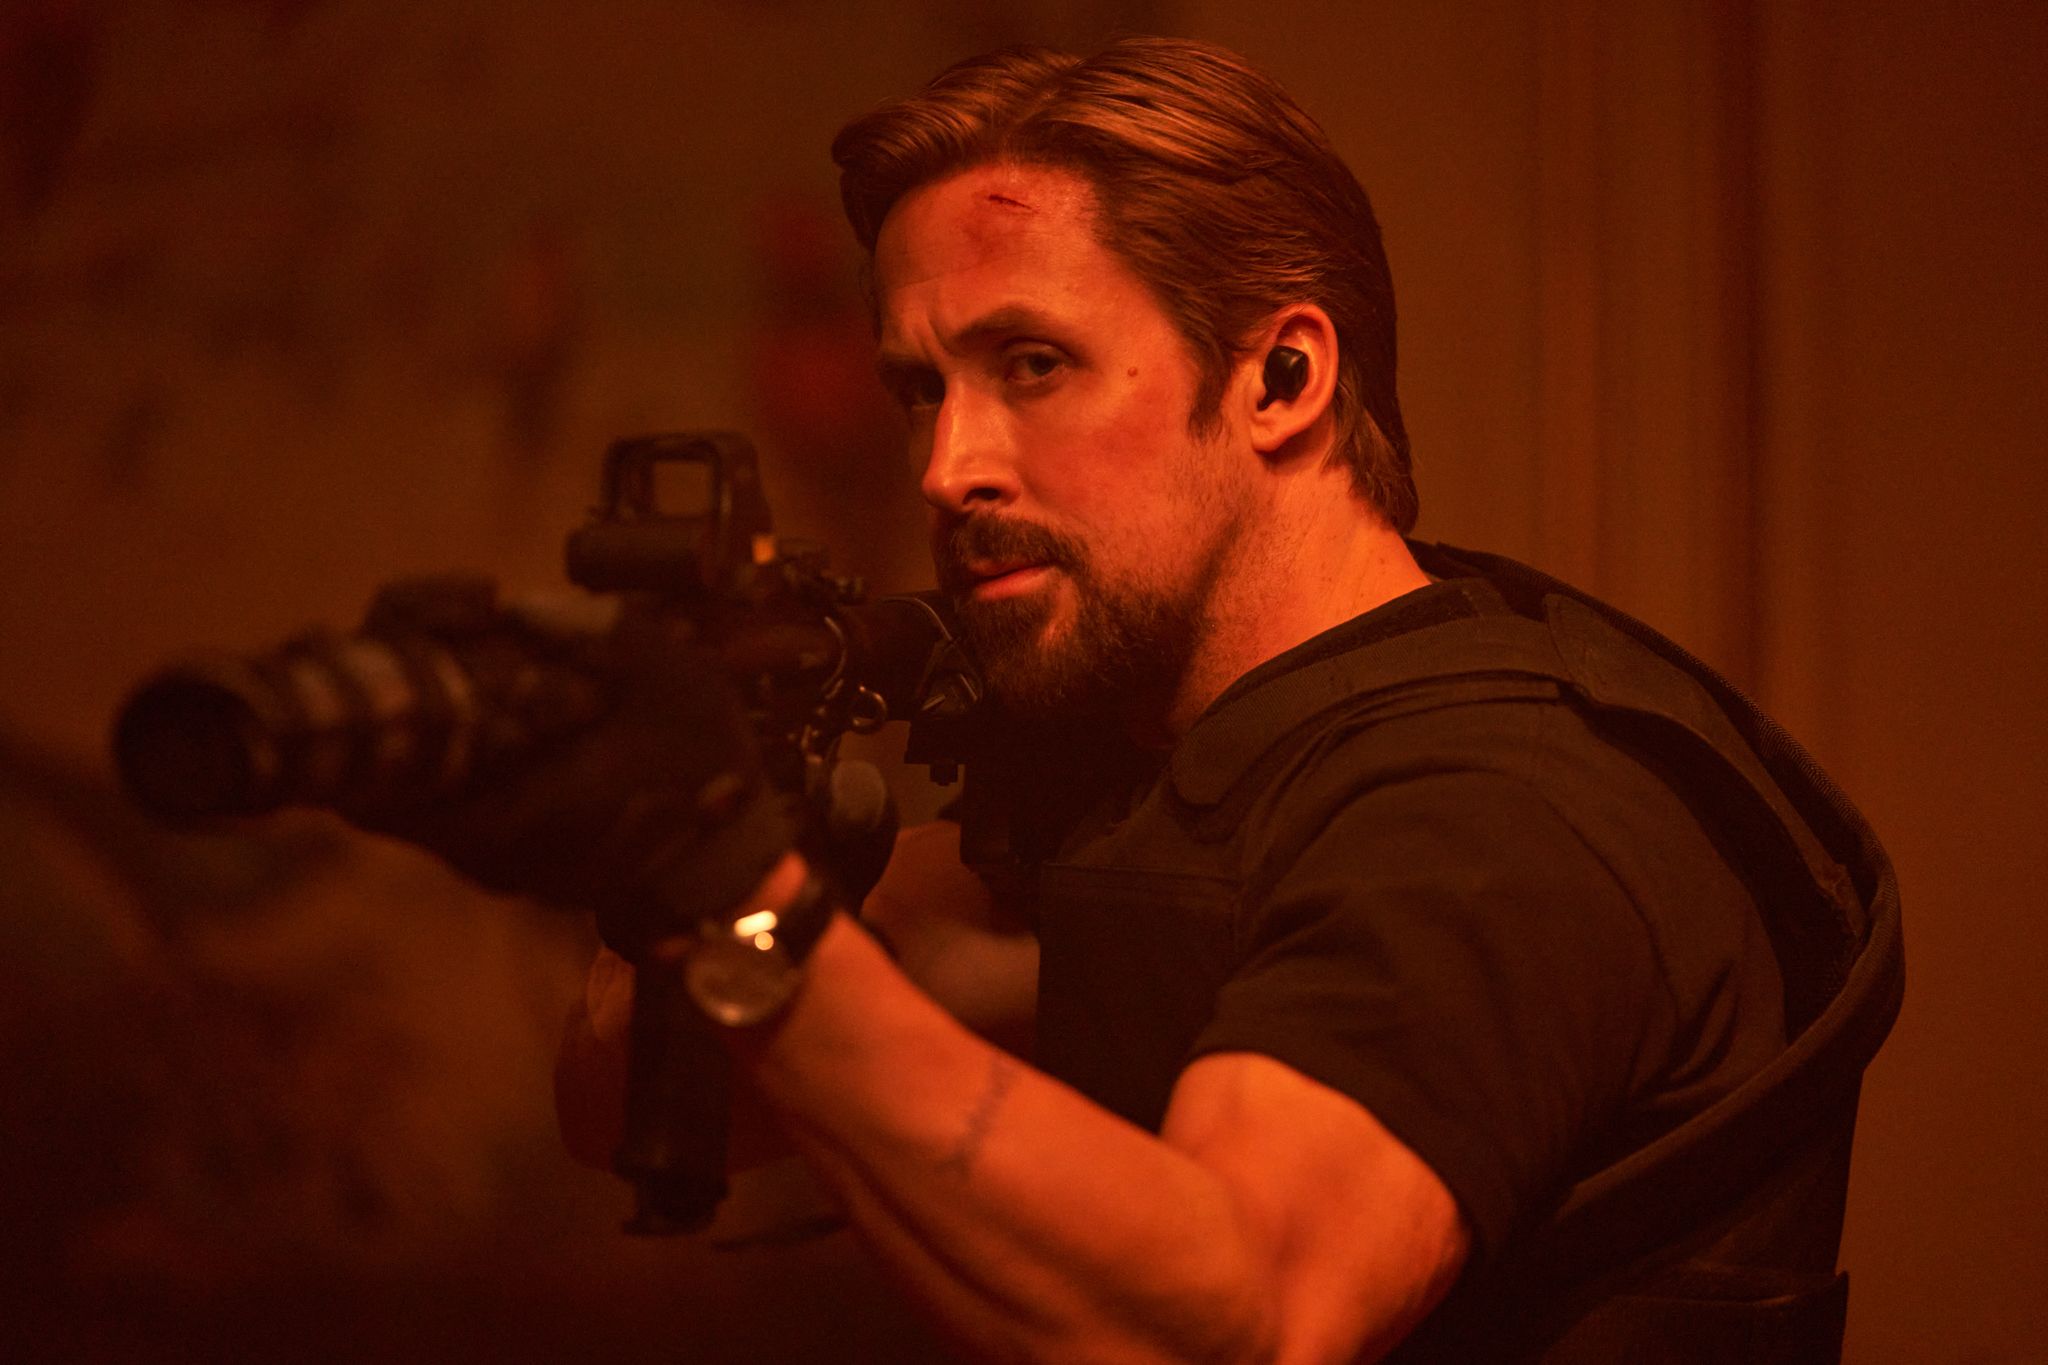 Ryan Gosling on Being a 'Blue Collar Bond' in 'The Gray Man' – WWD